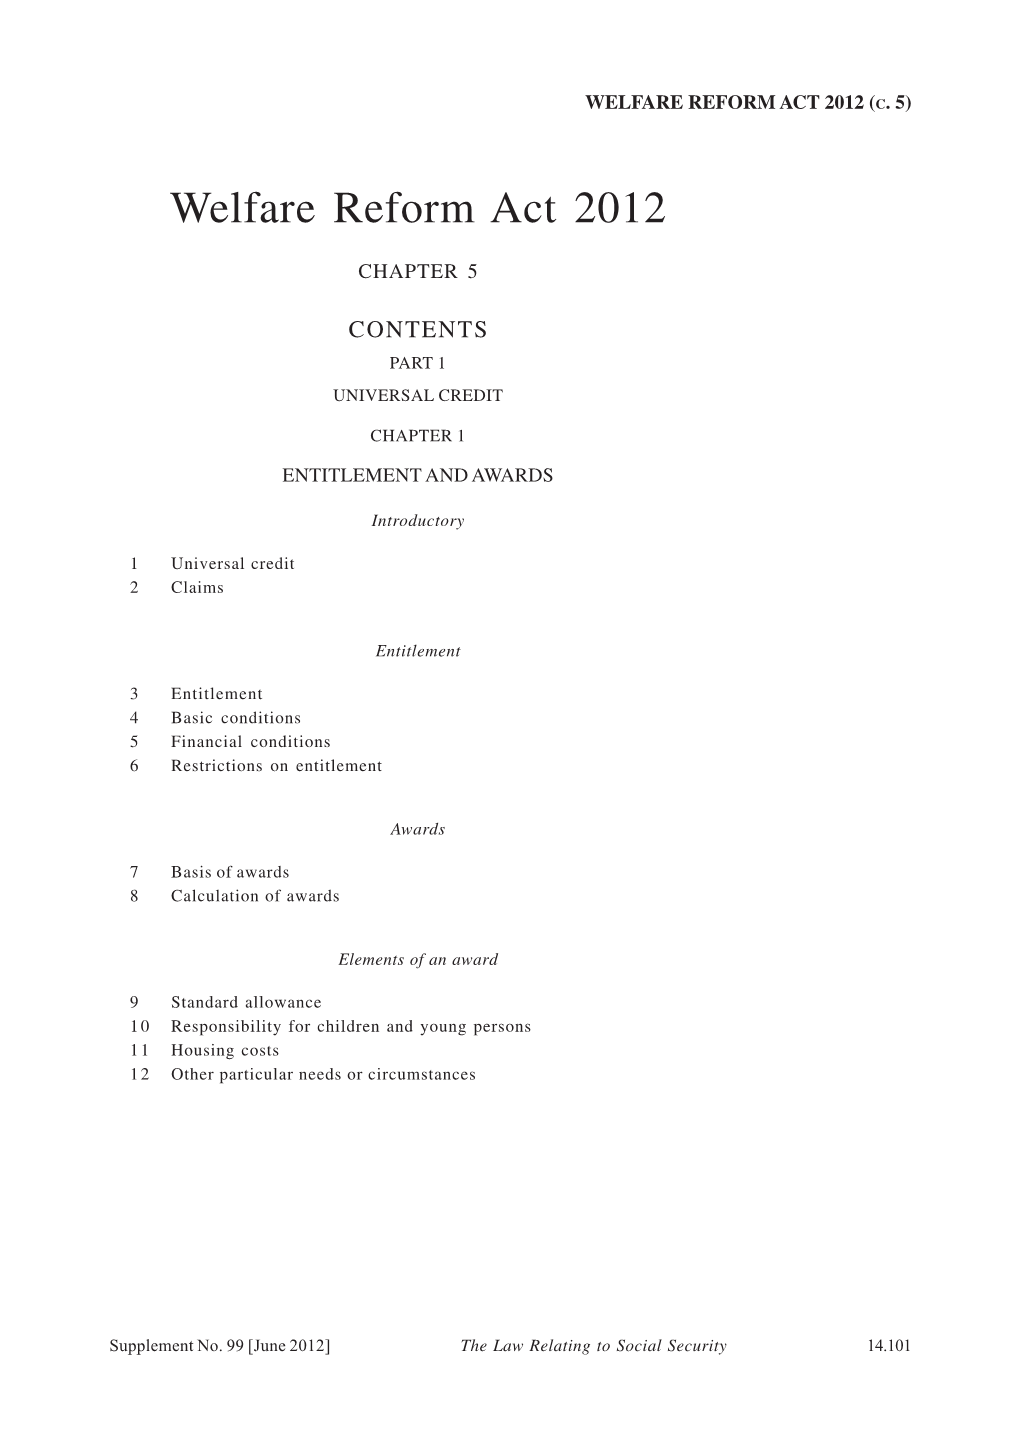 Welfare Reform Act 2012 (C